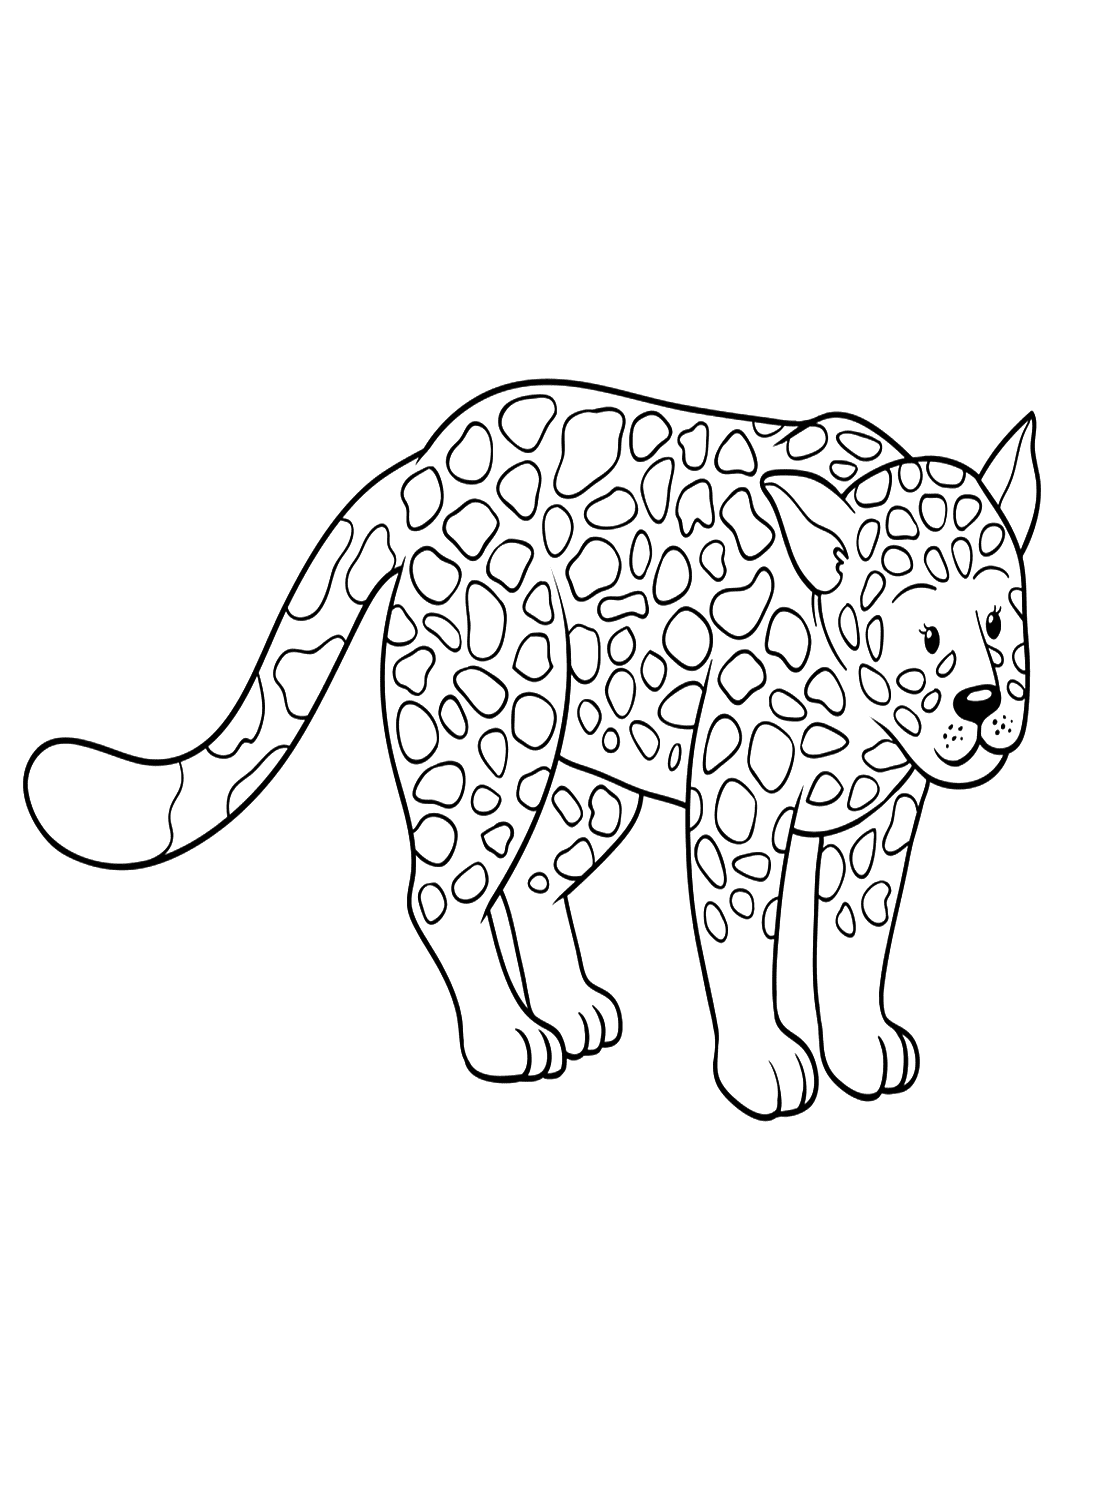 Simple Jaguar Coloring Page - Free Printable Coloring Pages